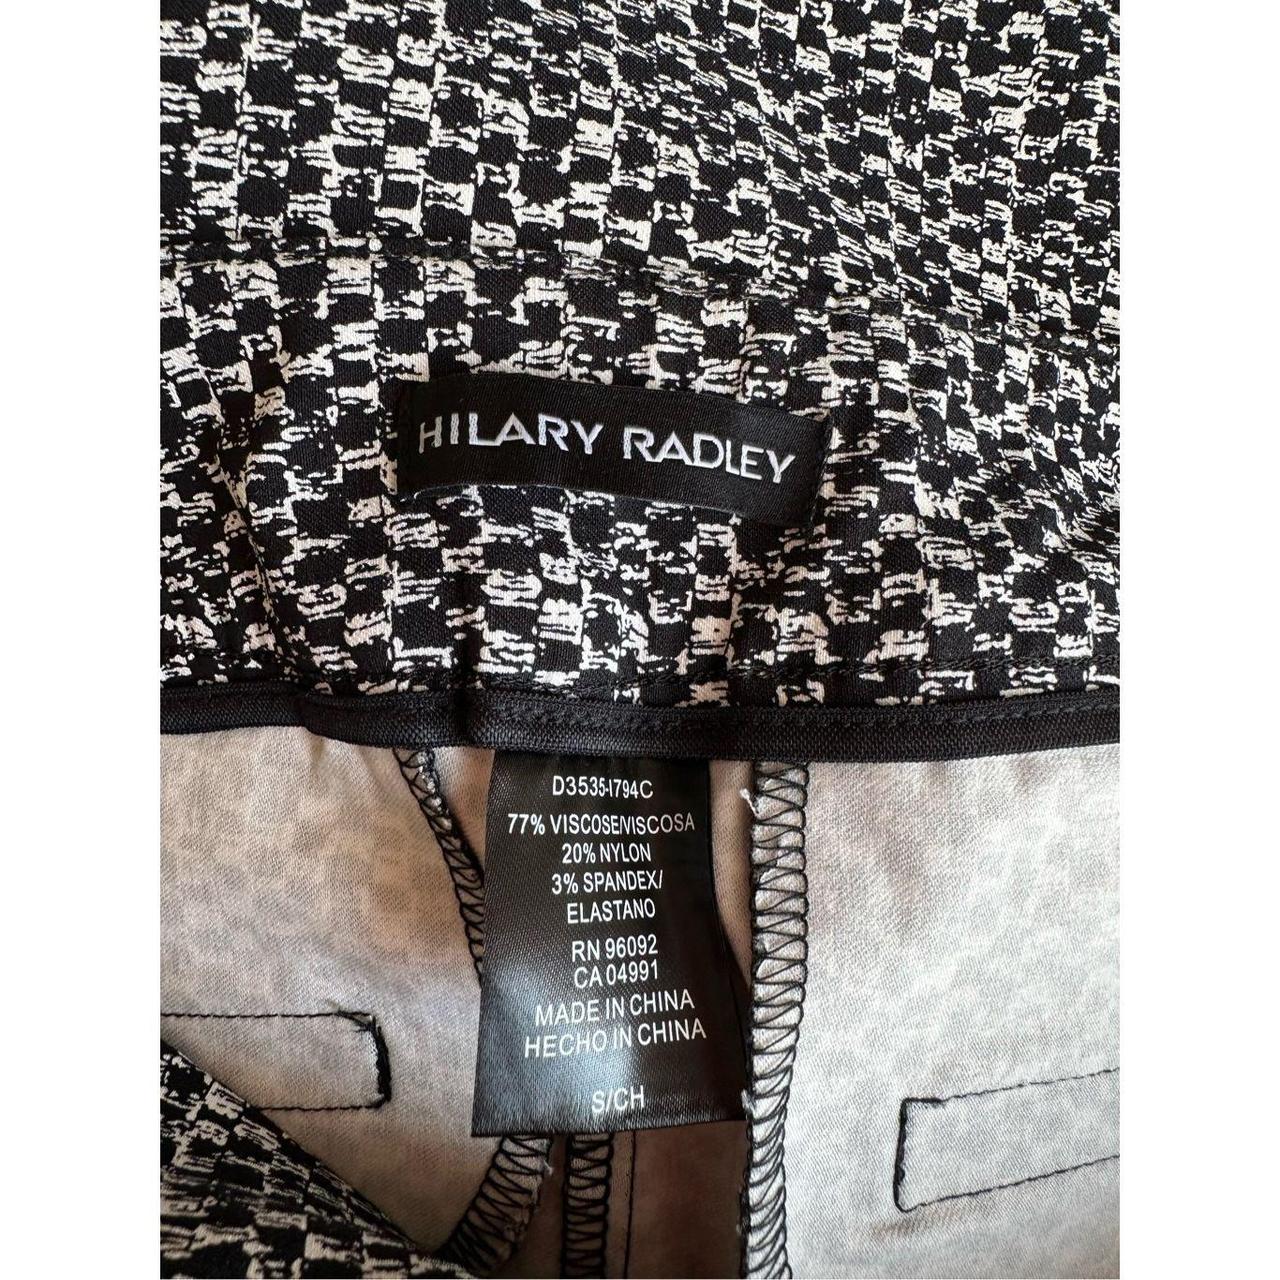 Hilary Radley | Clothes, Fashion, Striped top